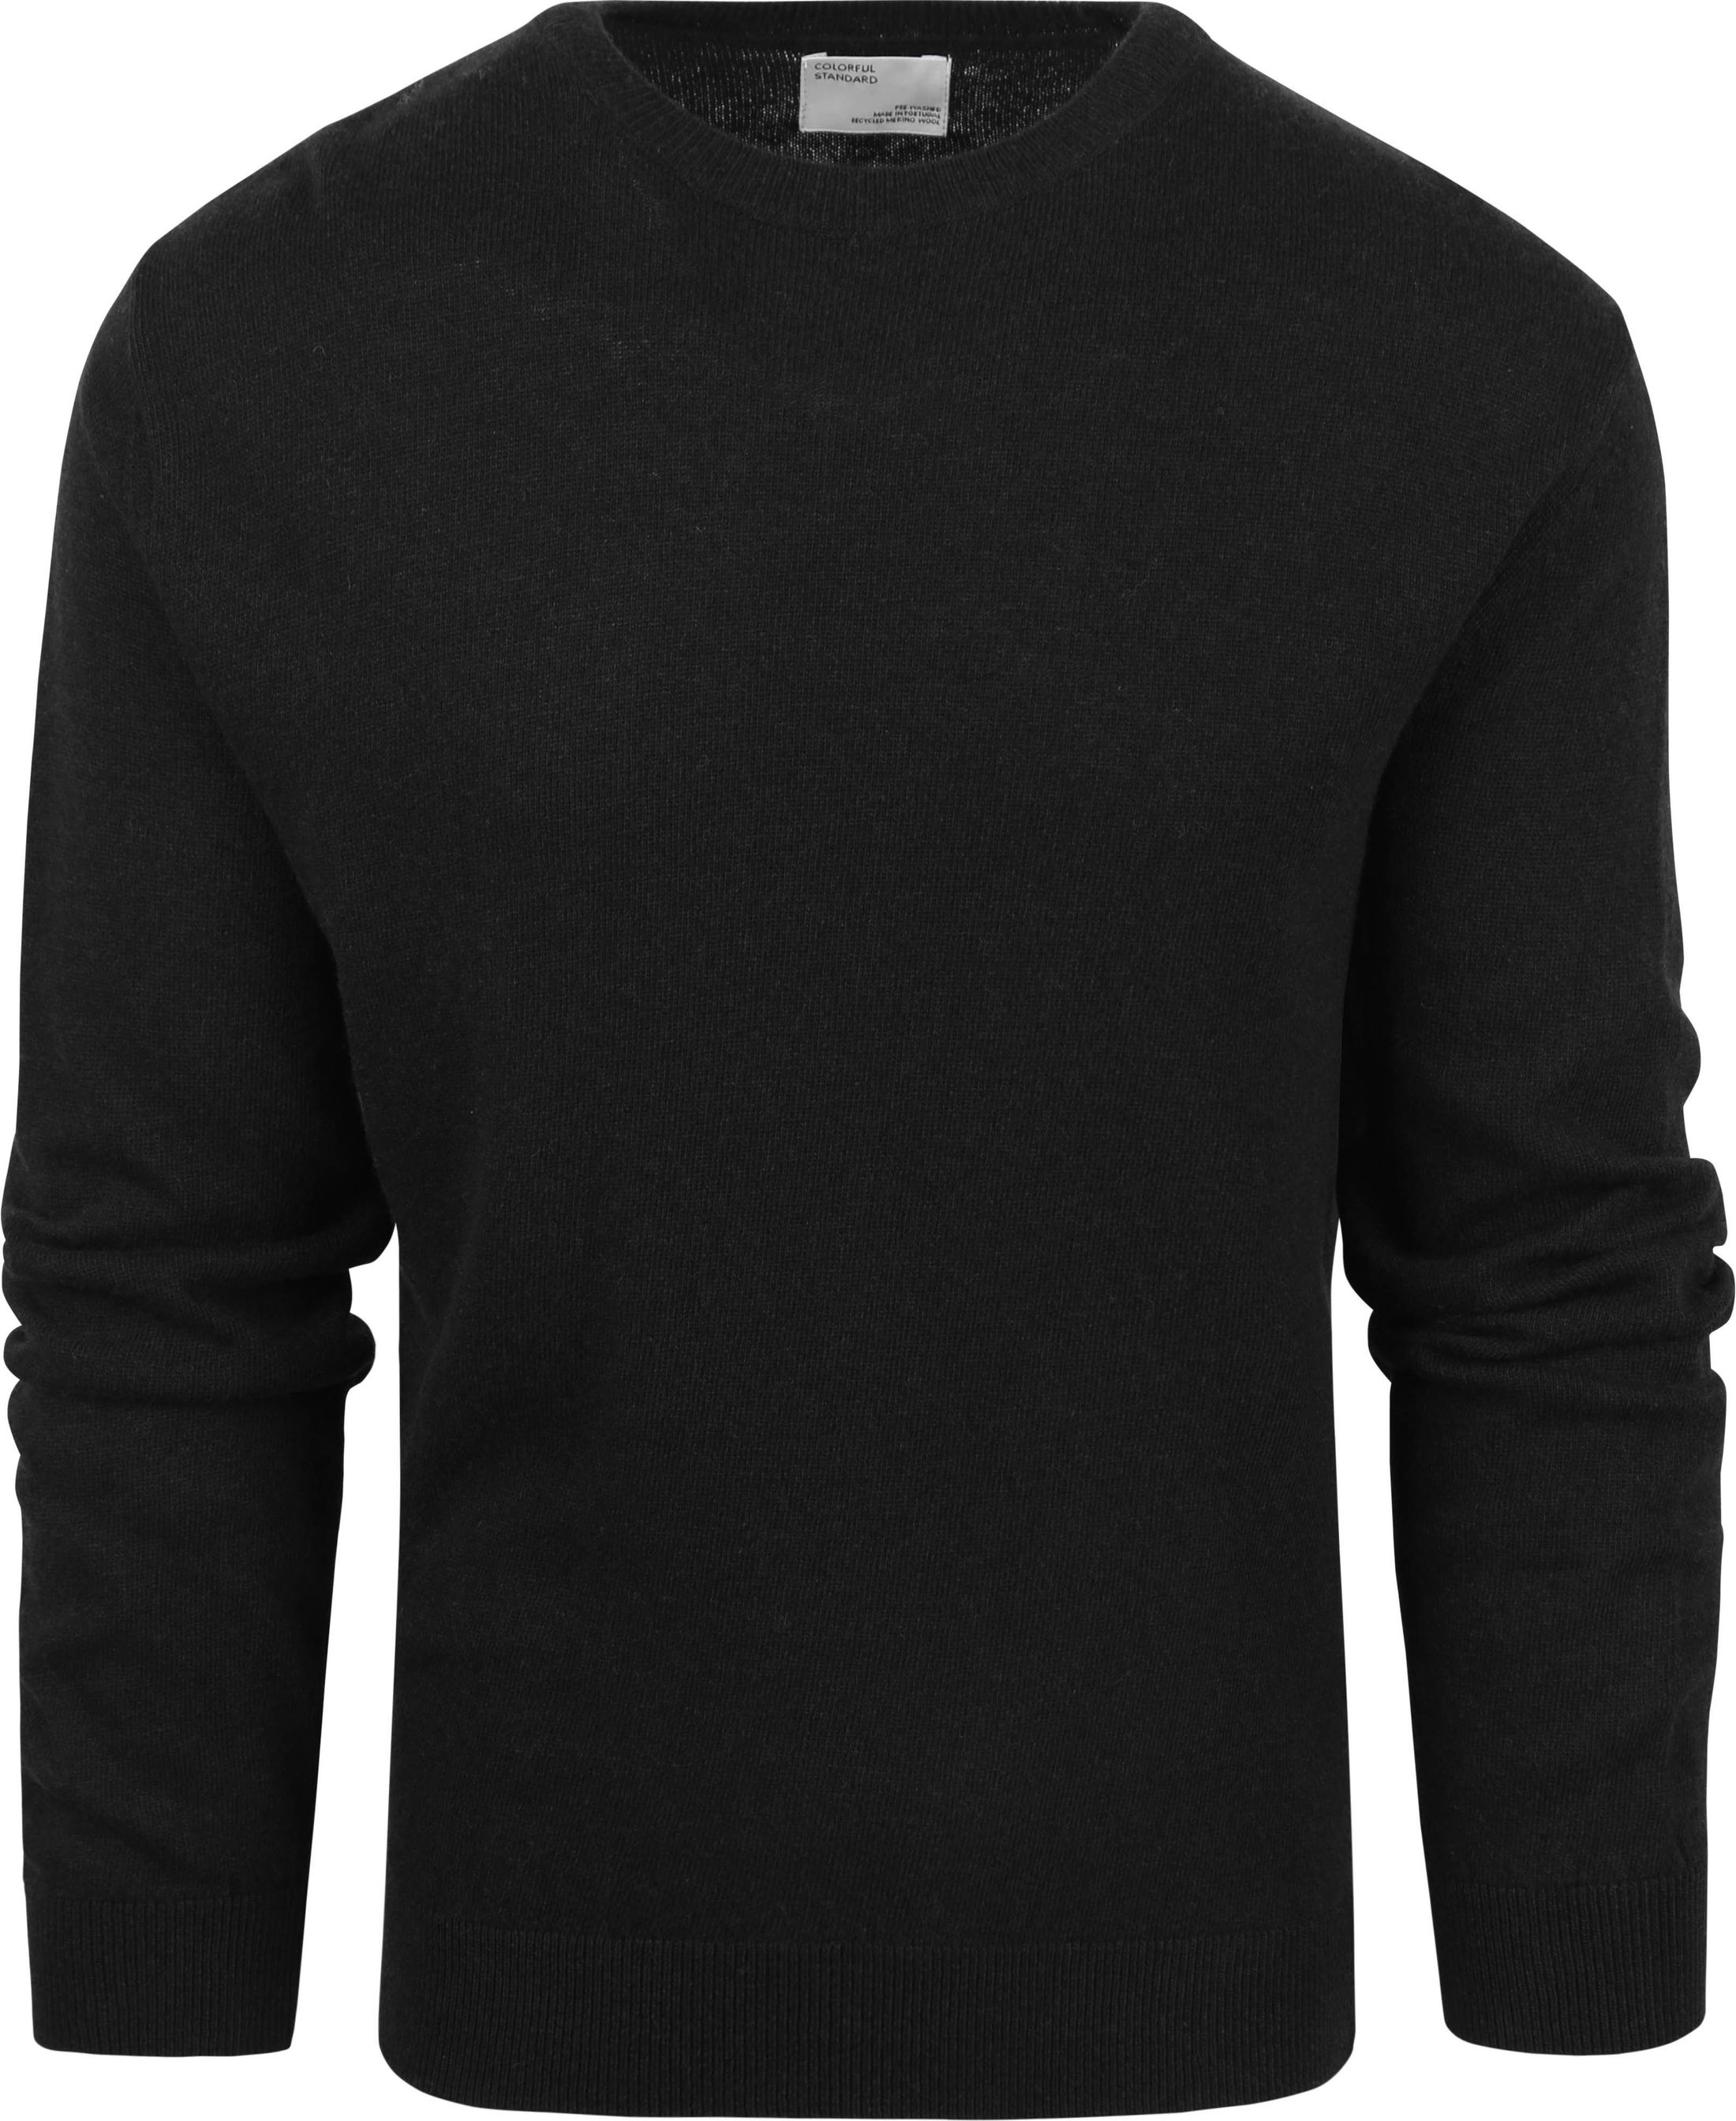 Colorful Standard Pullover Merino Black size XXL product